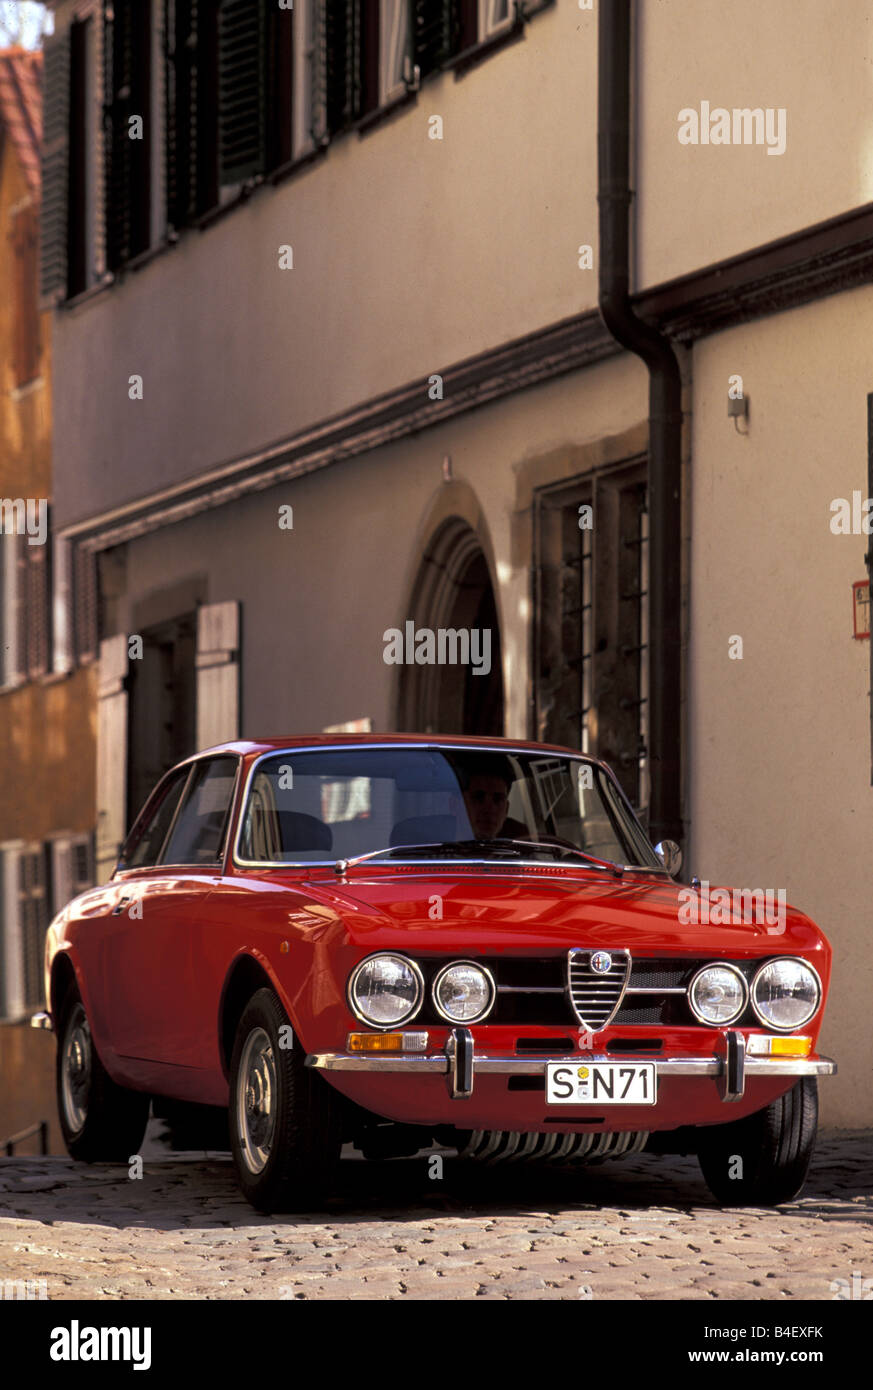 The Alfa Romeo GT designed by Bertone